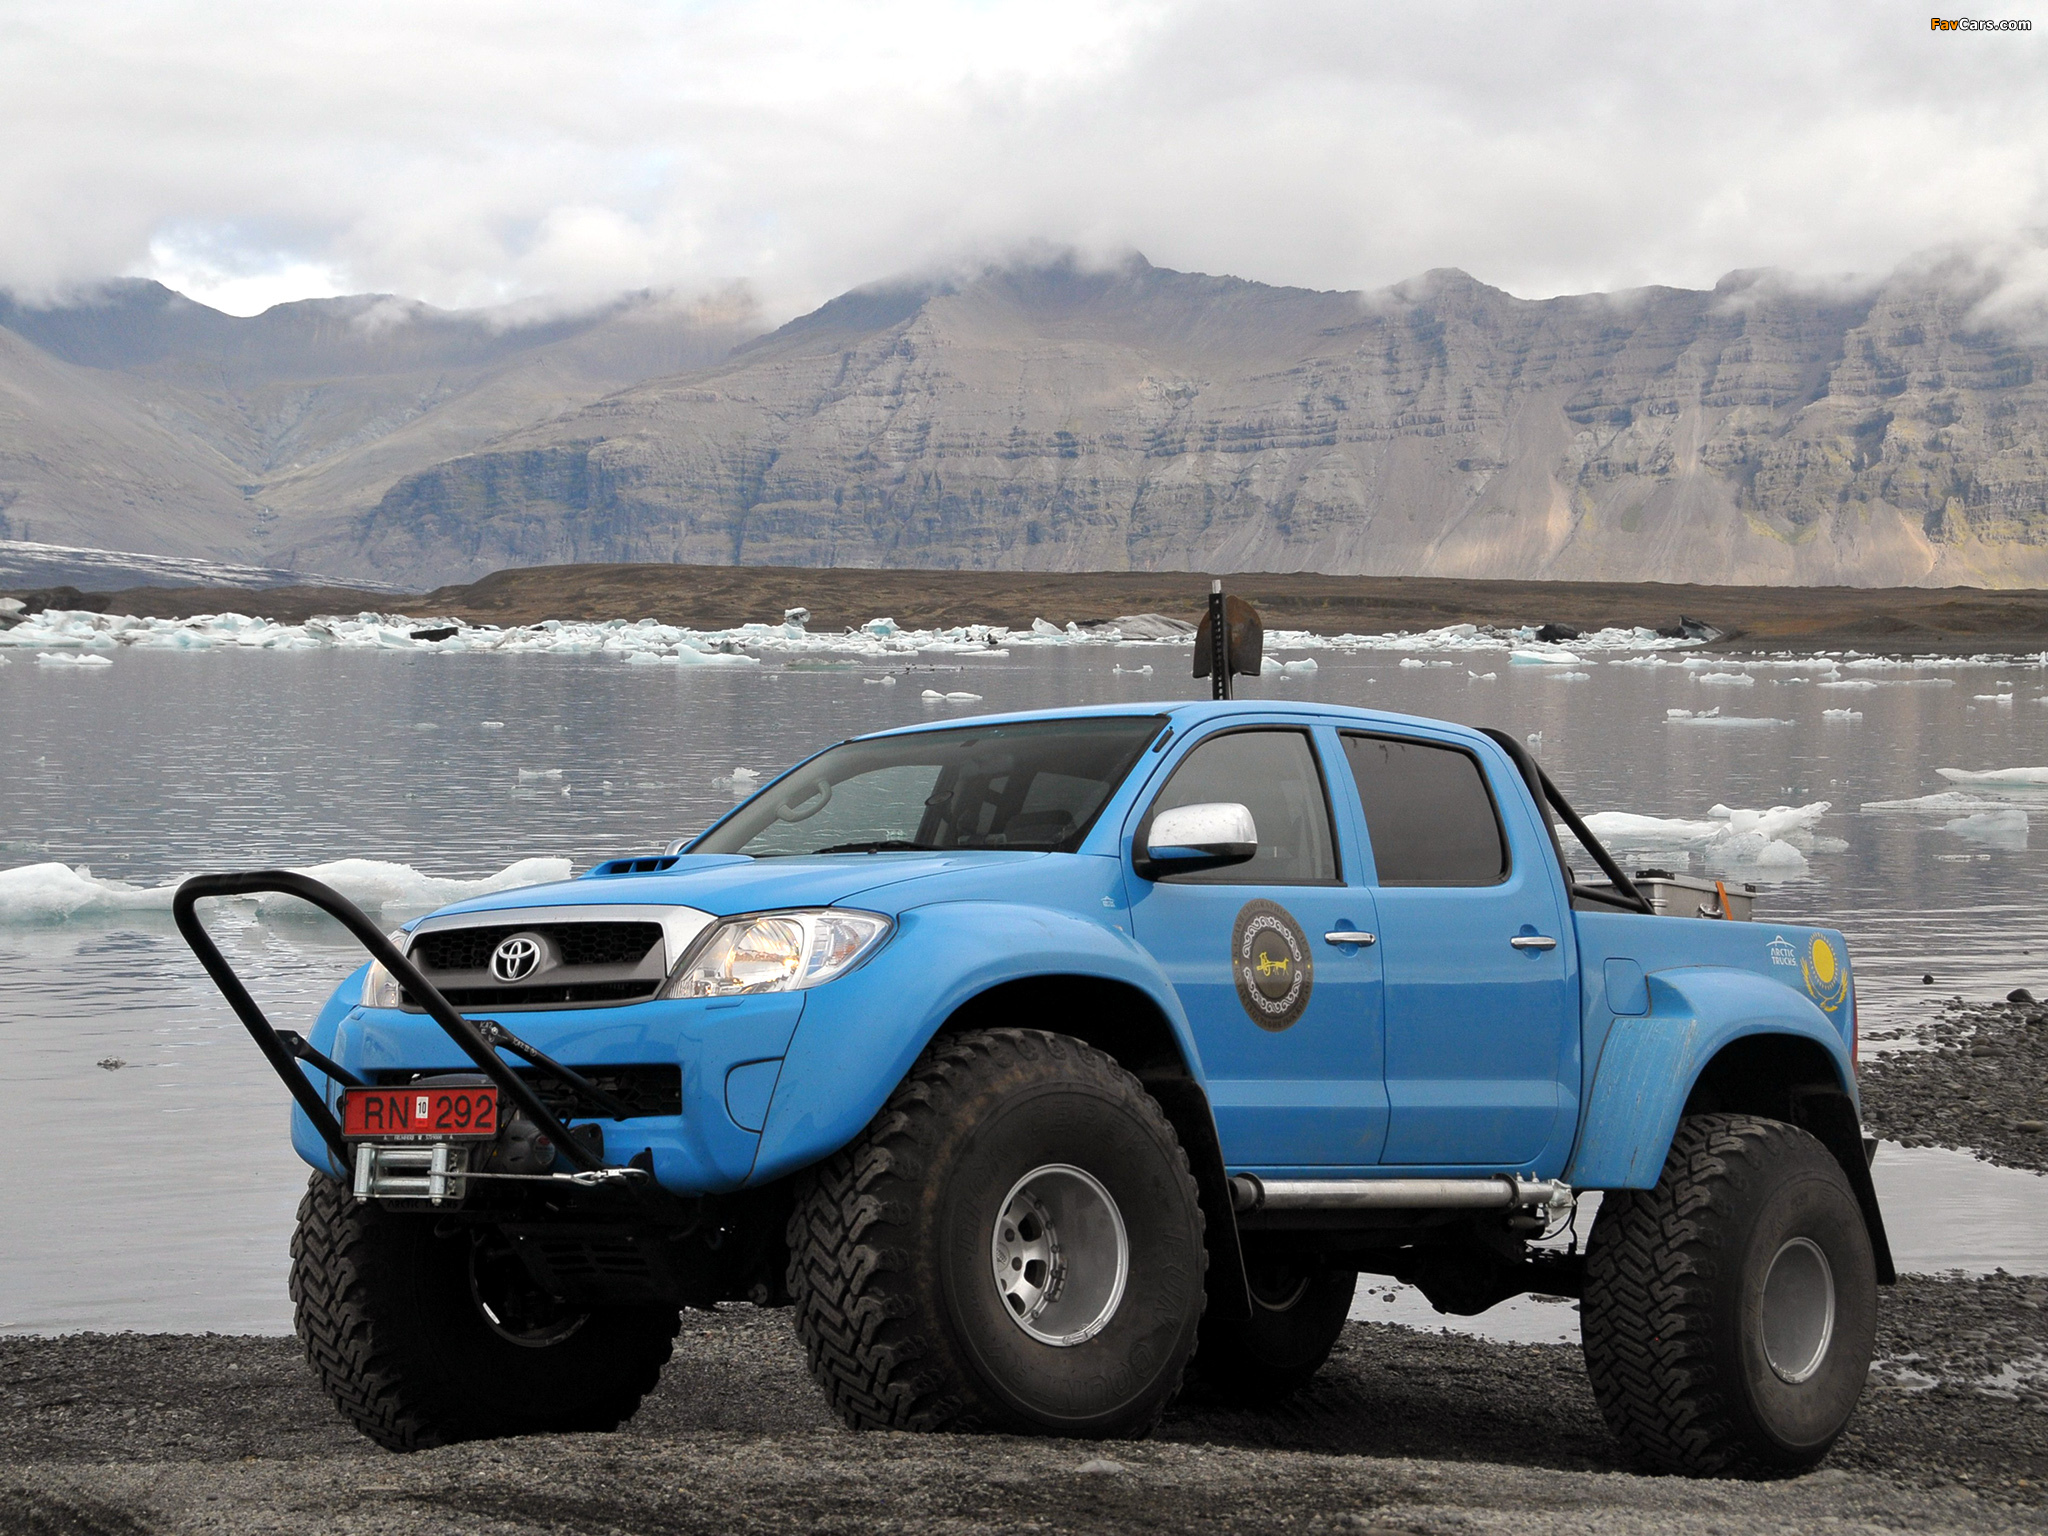 Arctic Trucks Toyota Hilux AT44 2007 photos (2048 x 1536)